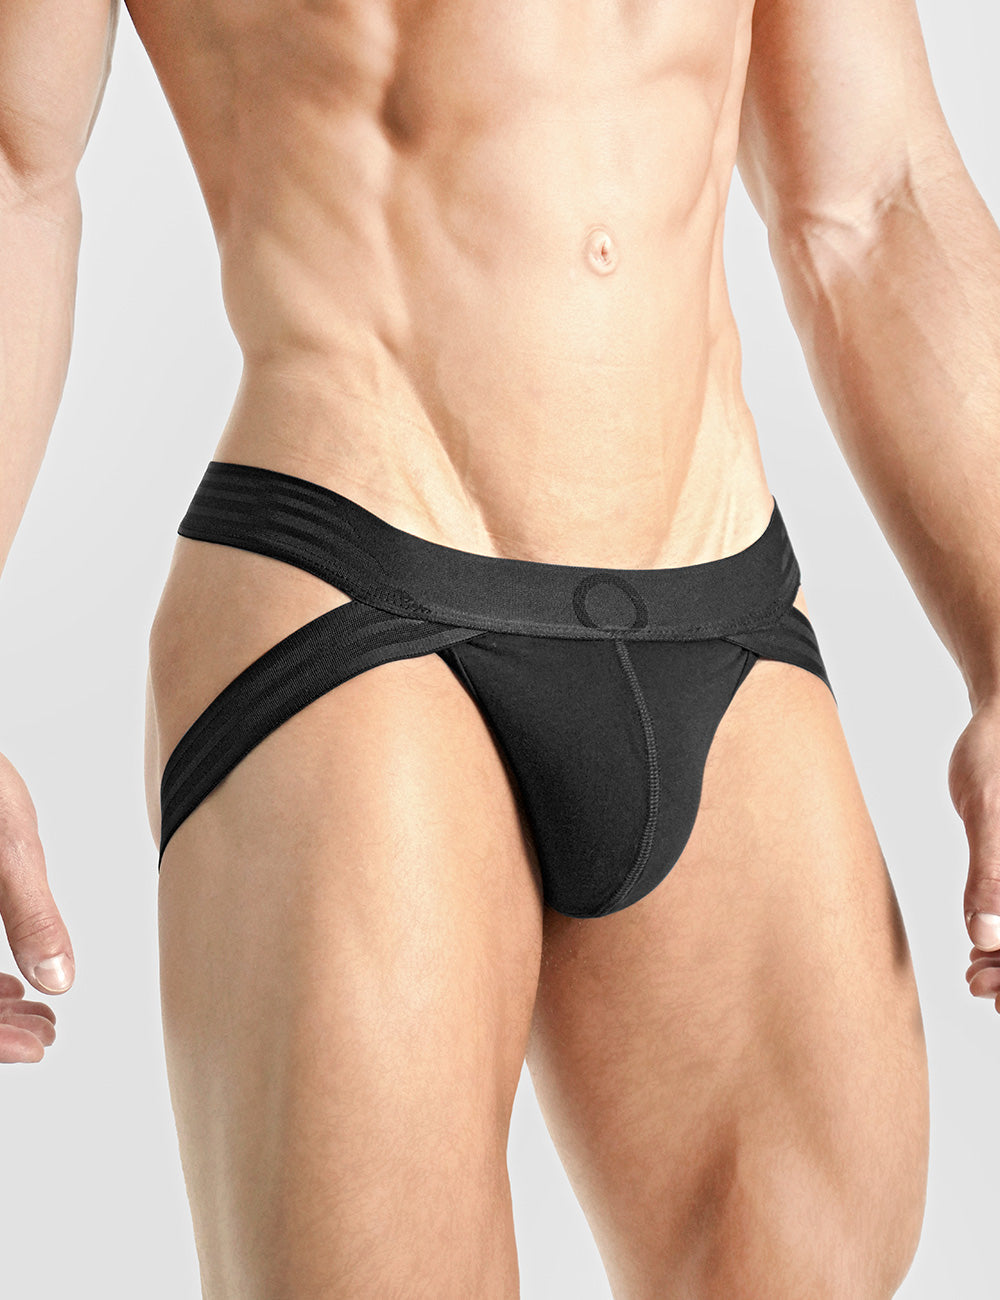 Rounderbum Men's Butt lifting underwear